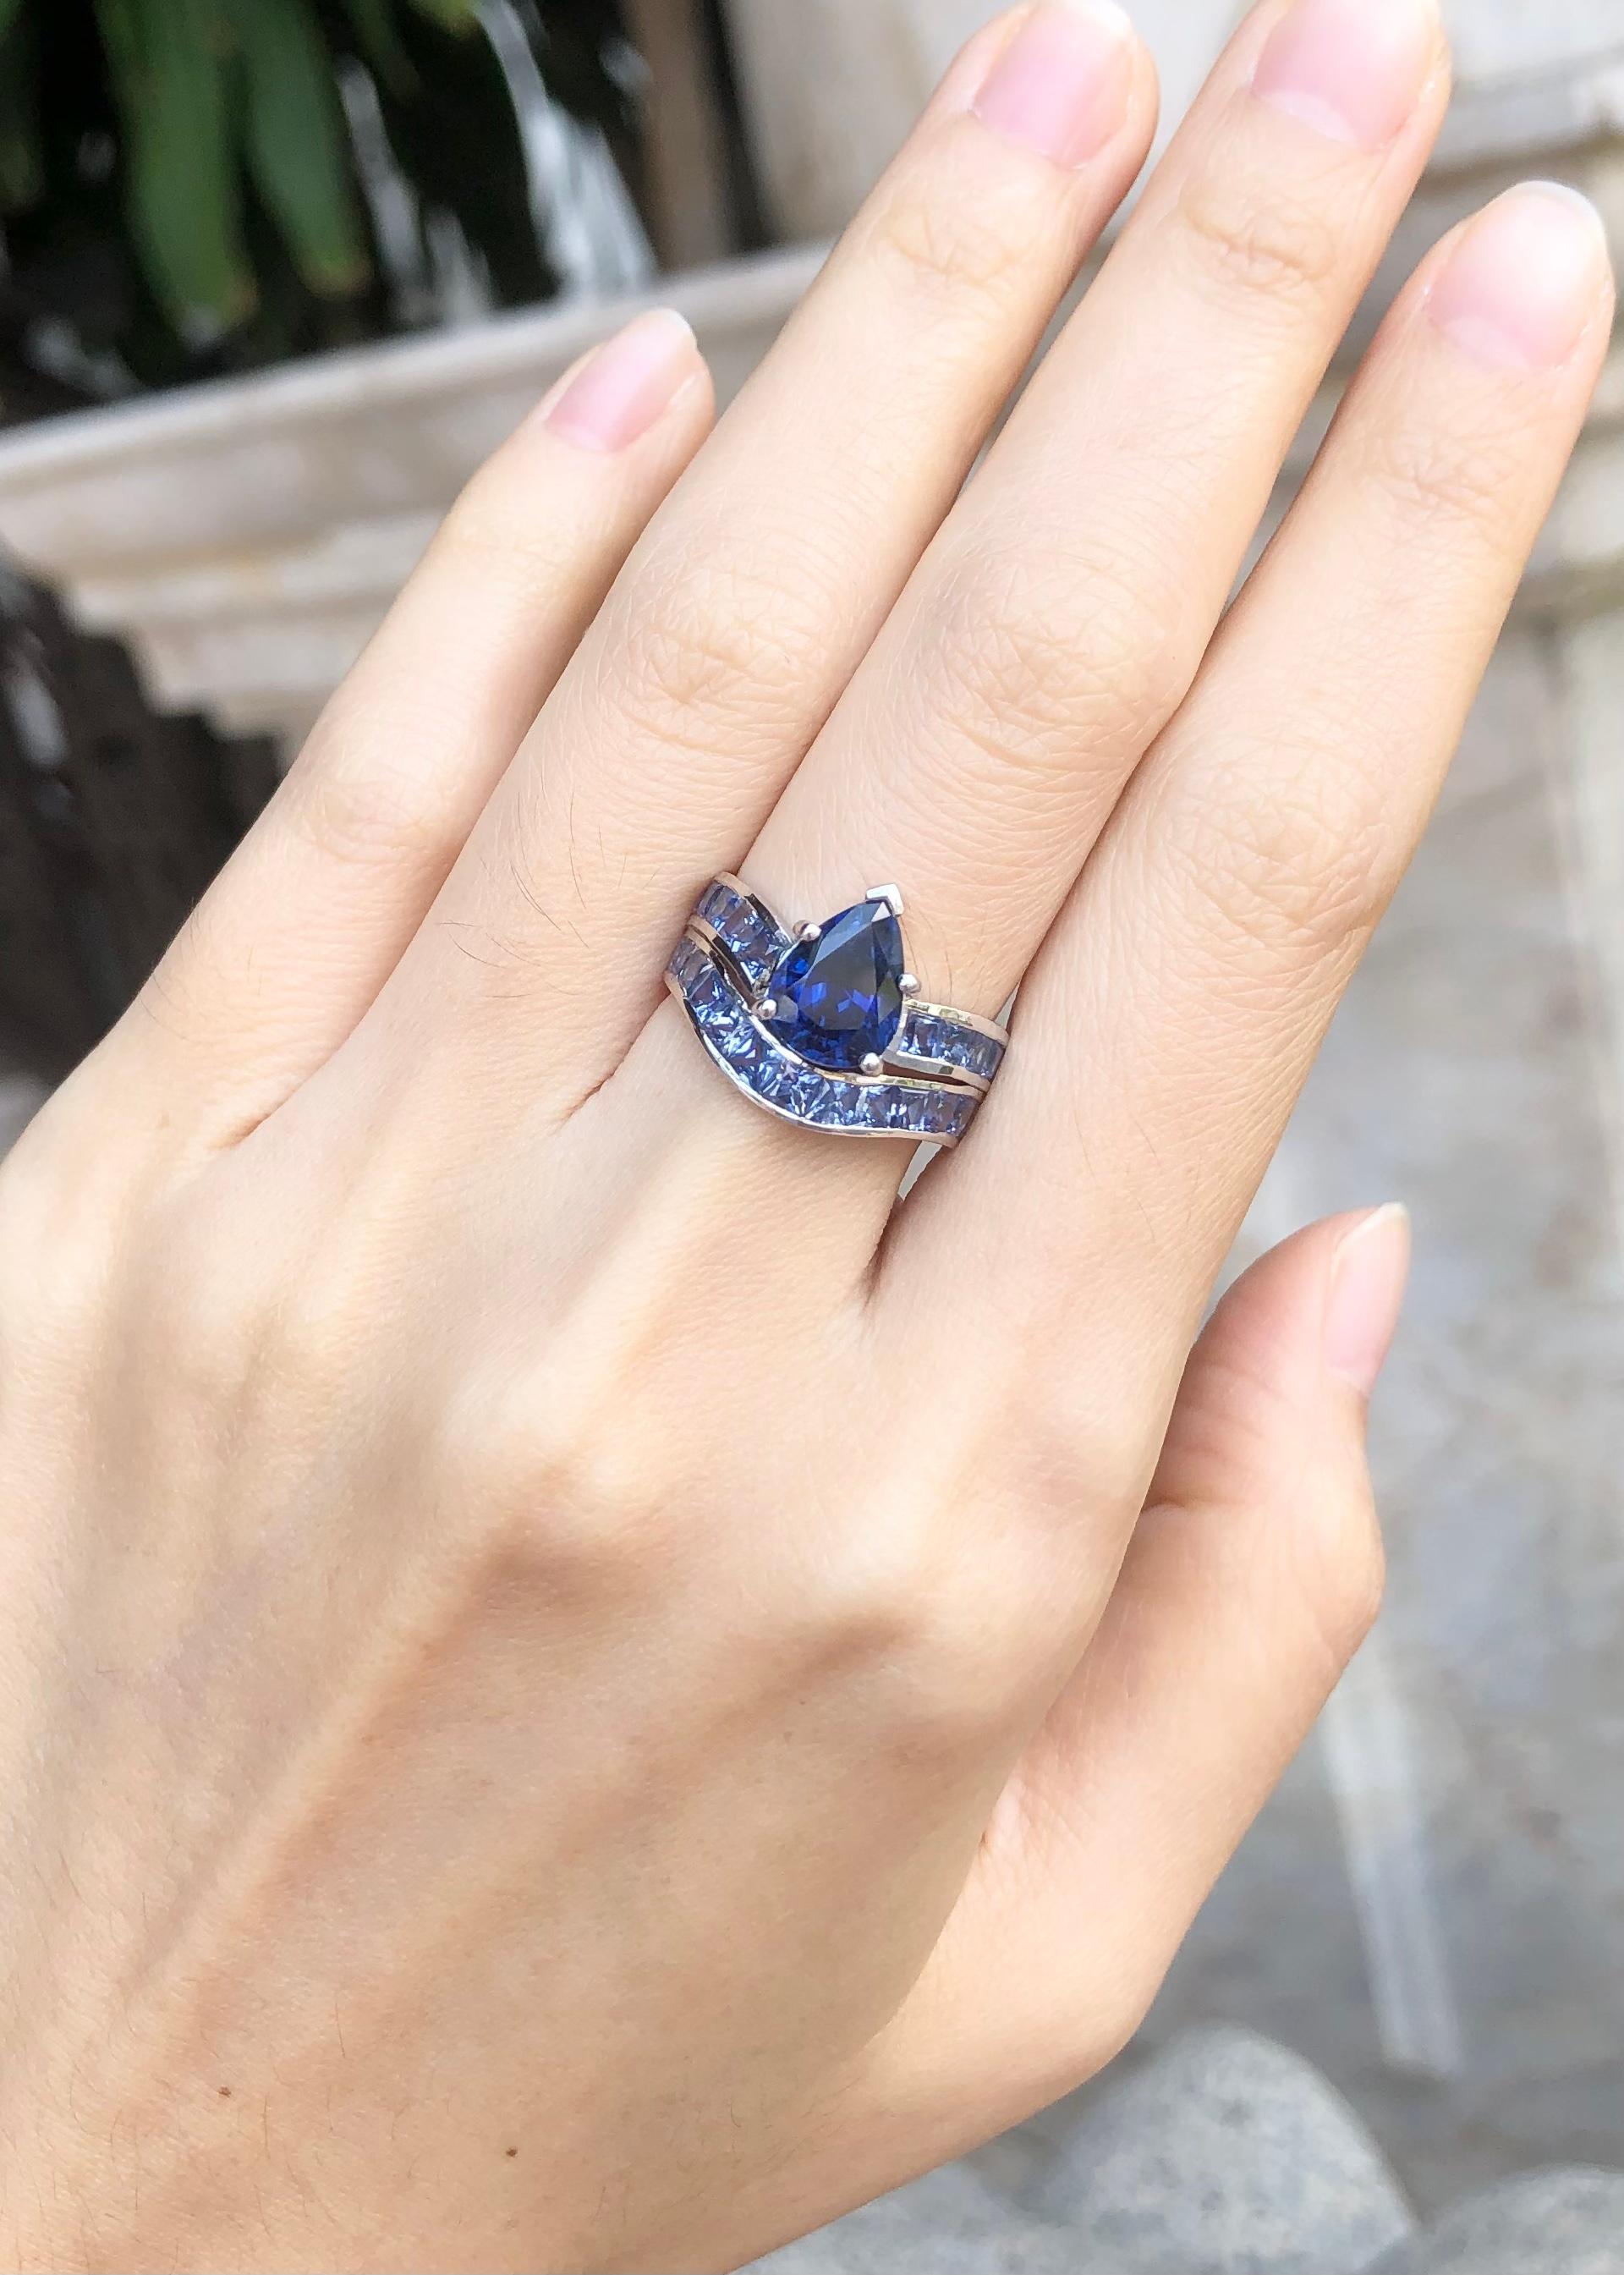 Blue Sapphire 2.44 carats with Blue Sapphire 2.57 carats Ring set in 18 Karat White Gold Settings

Width:  0.8 cm 
Length: 1.0 cm
Ring Size: 51
Total Weight: 7.25 grams


